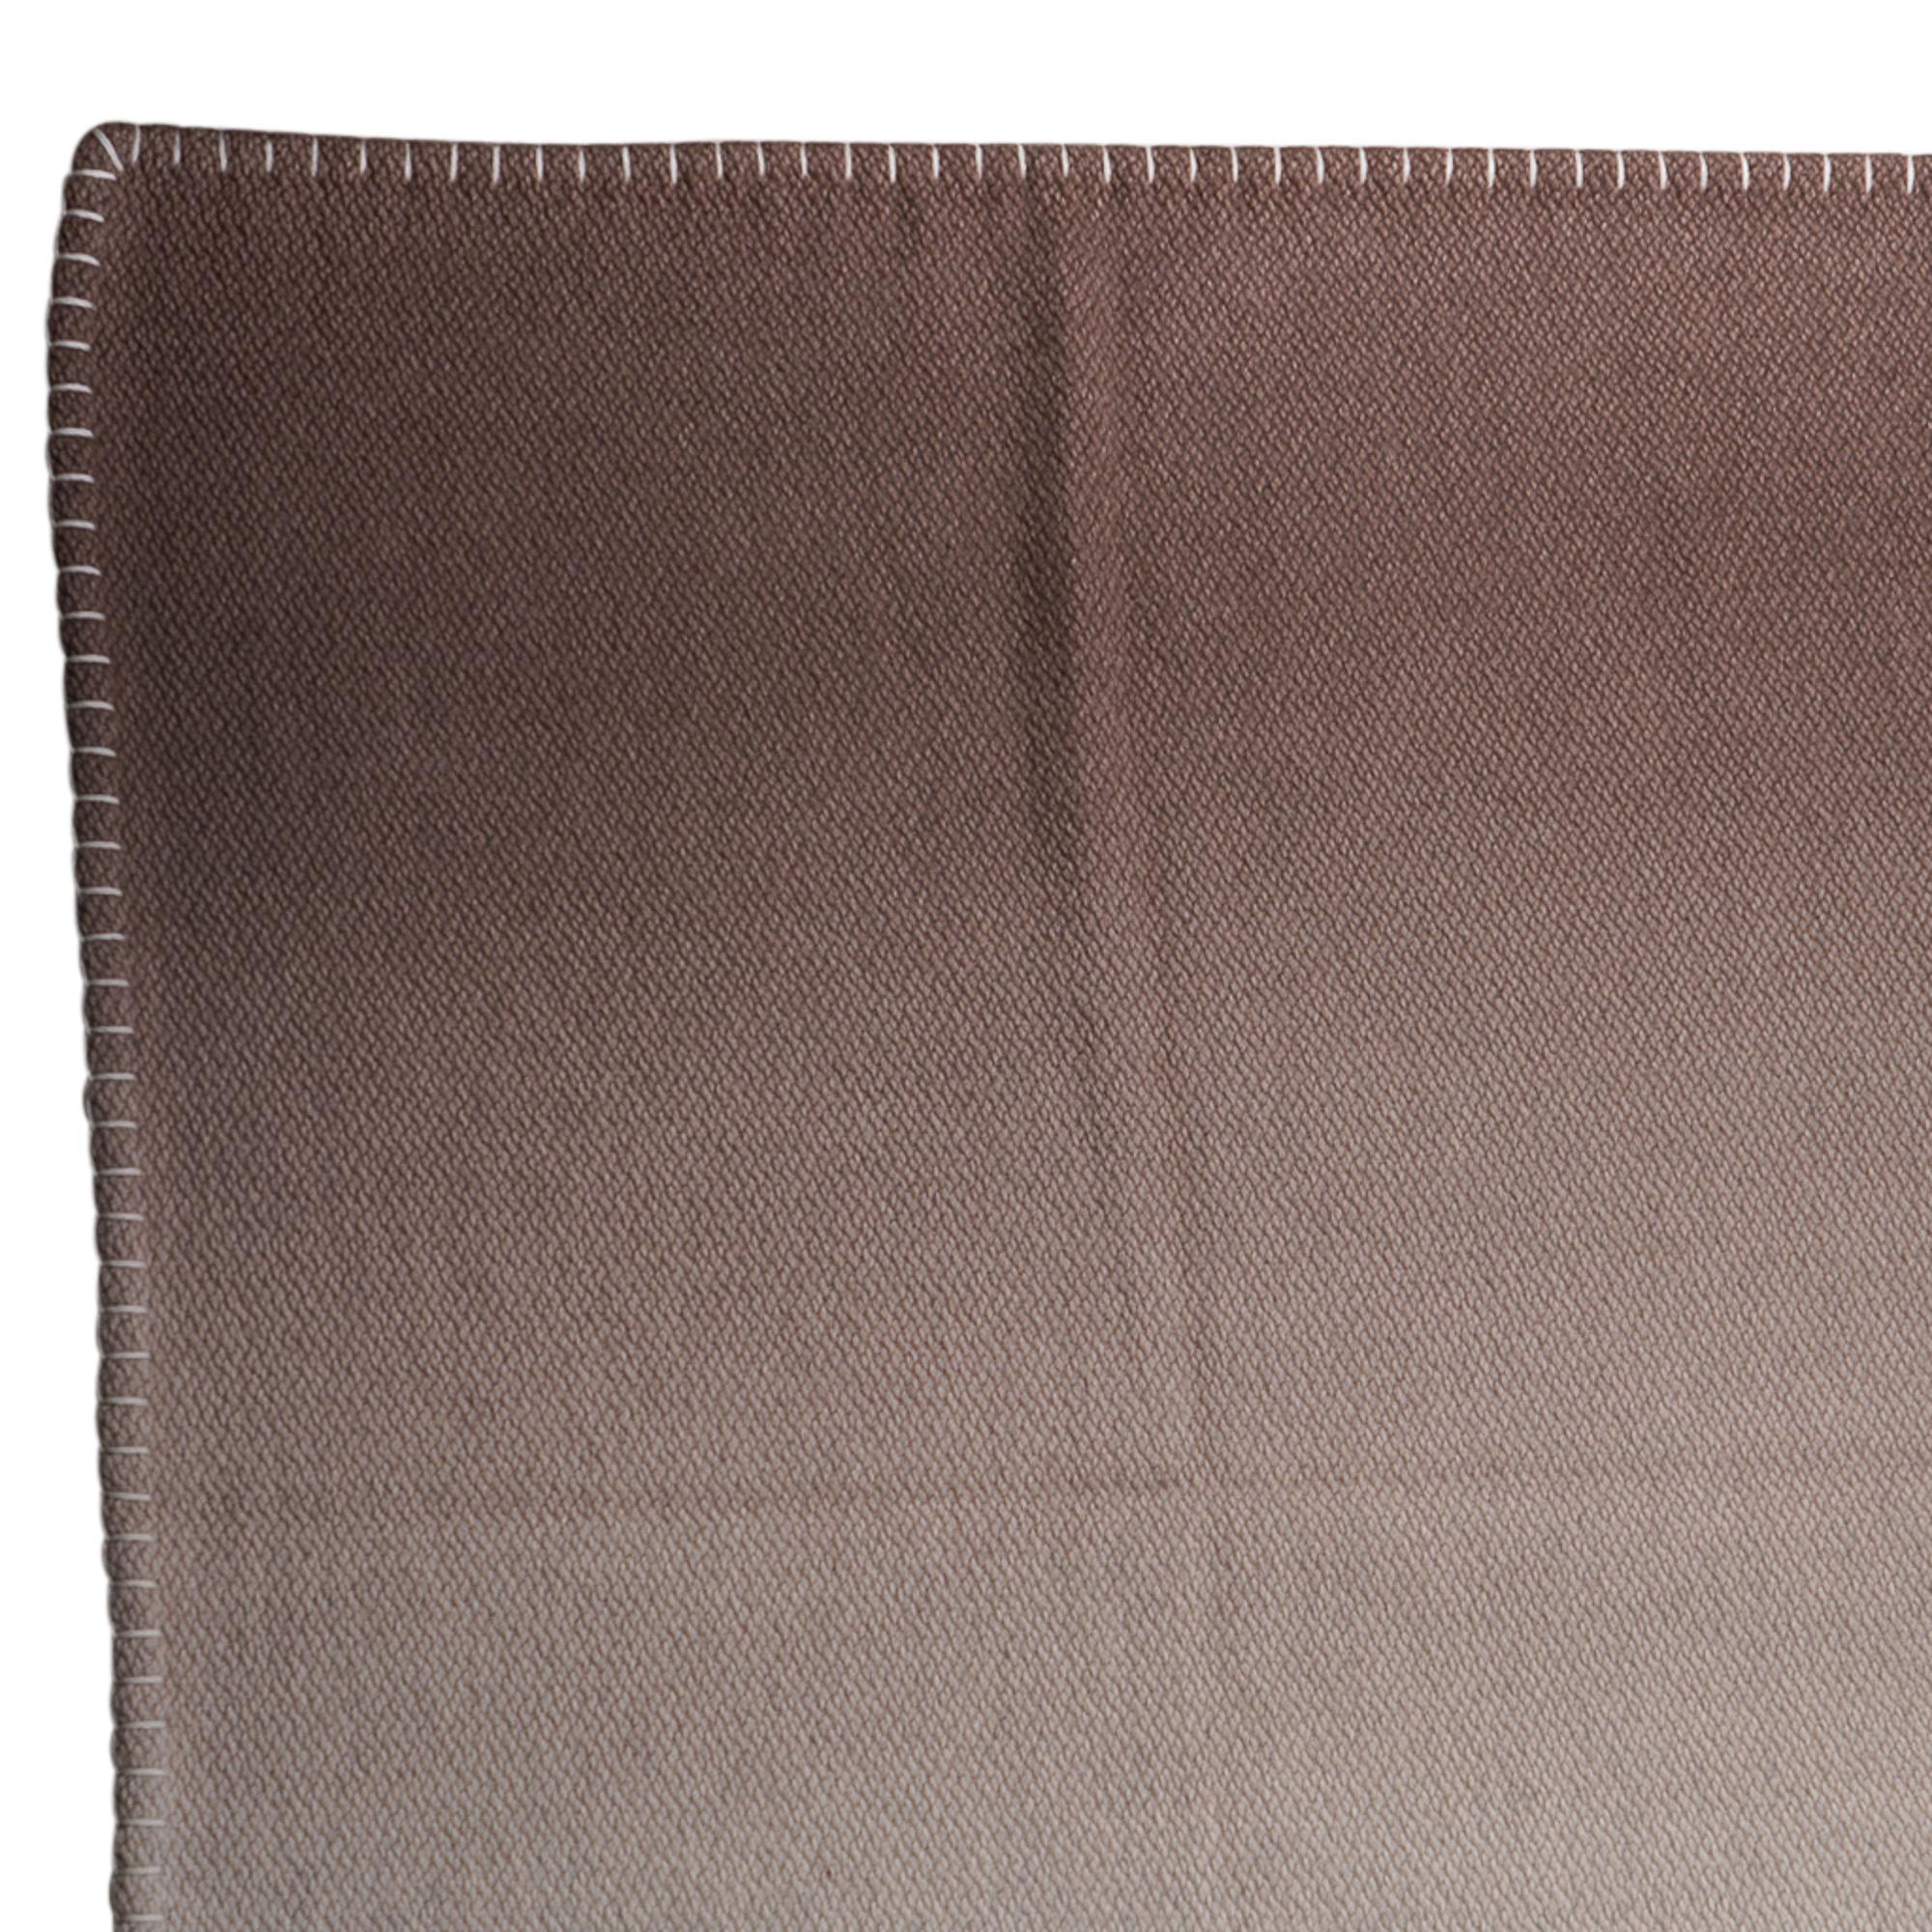 Hermes Yack 'n' Dye Ombre Blanket Naturel New For Sale 1